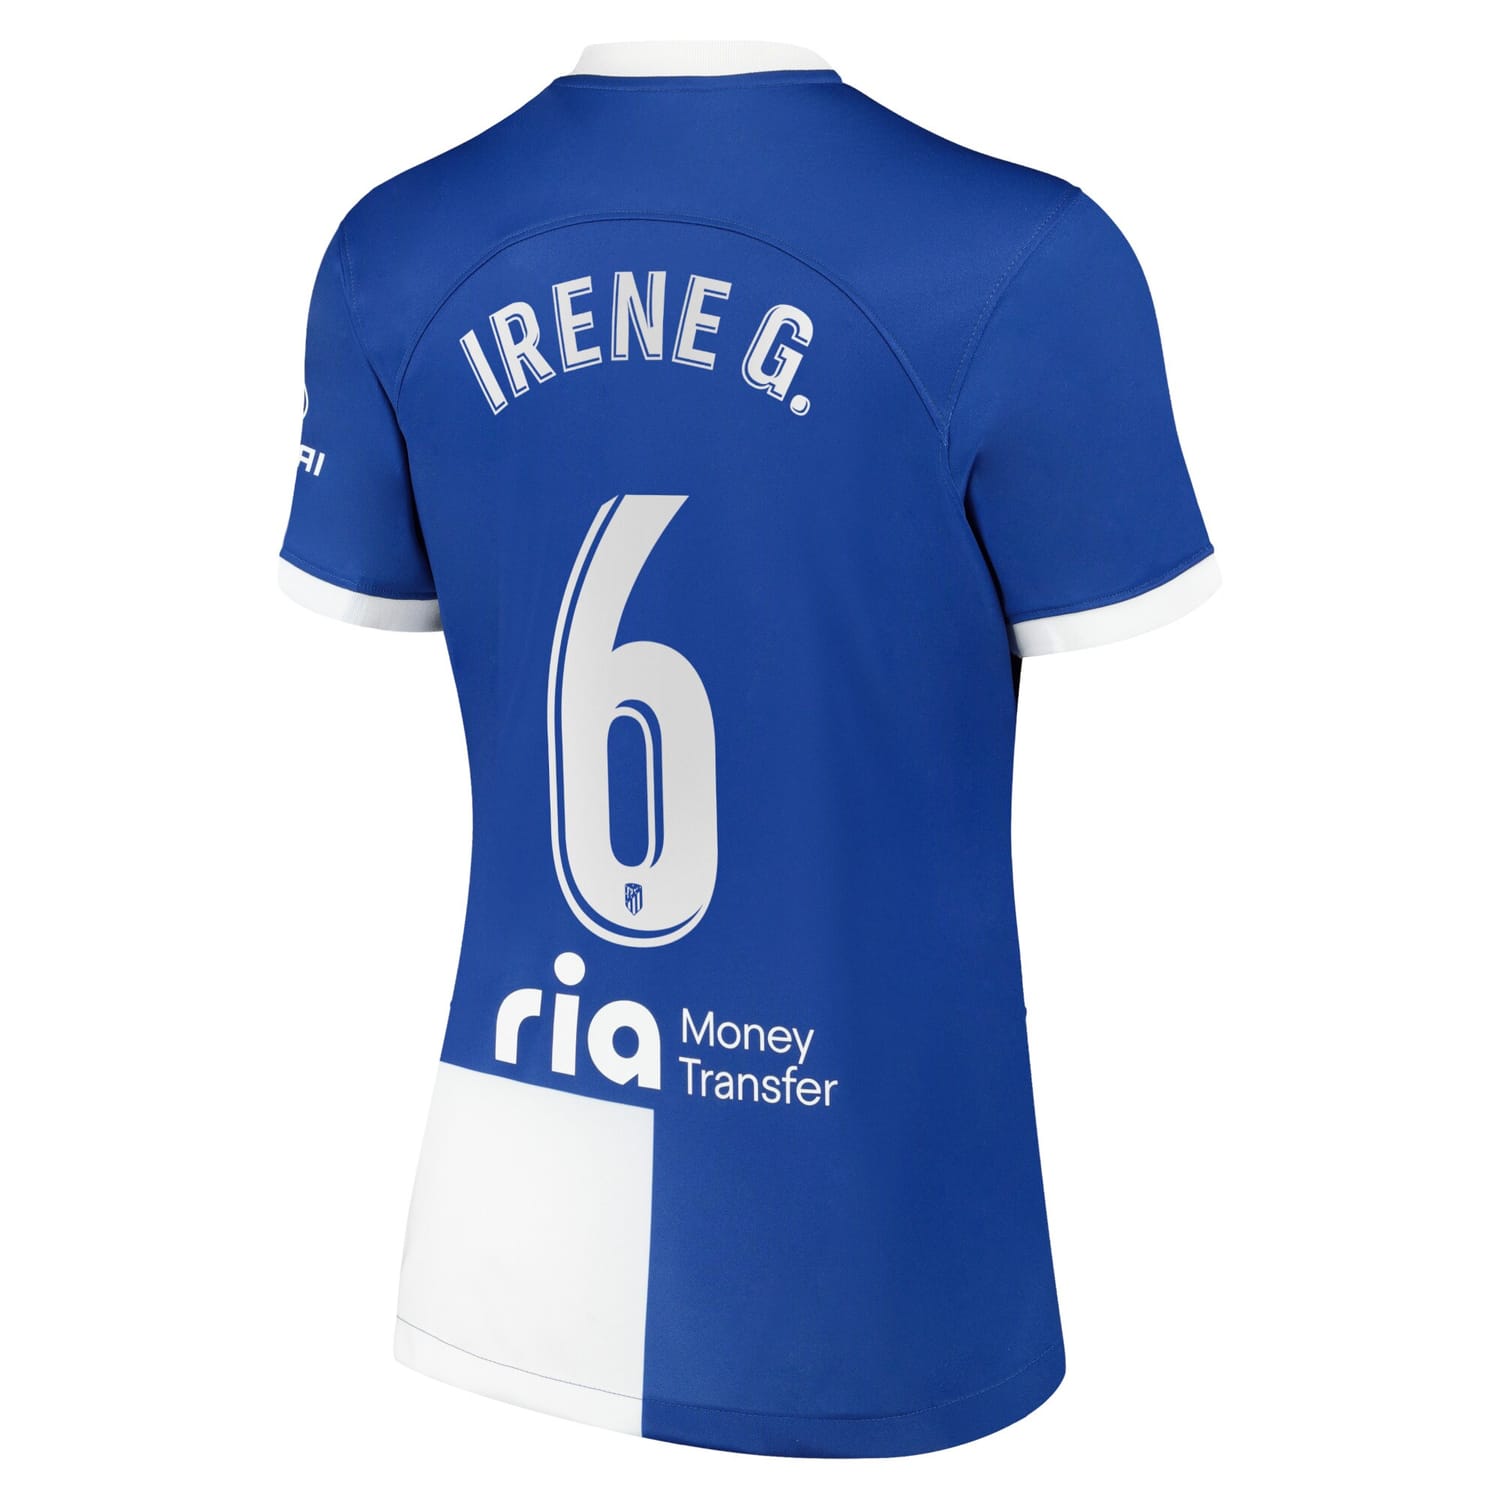 La Liga Atletico de Madrid Jersey Shirt 2022-23 player Irene Guerrero 6 printing for Women